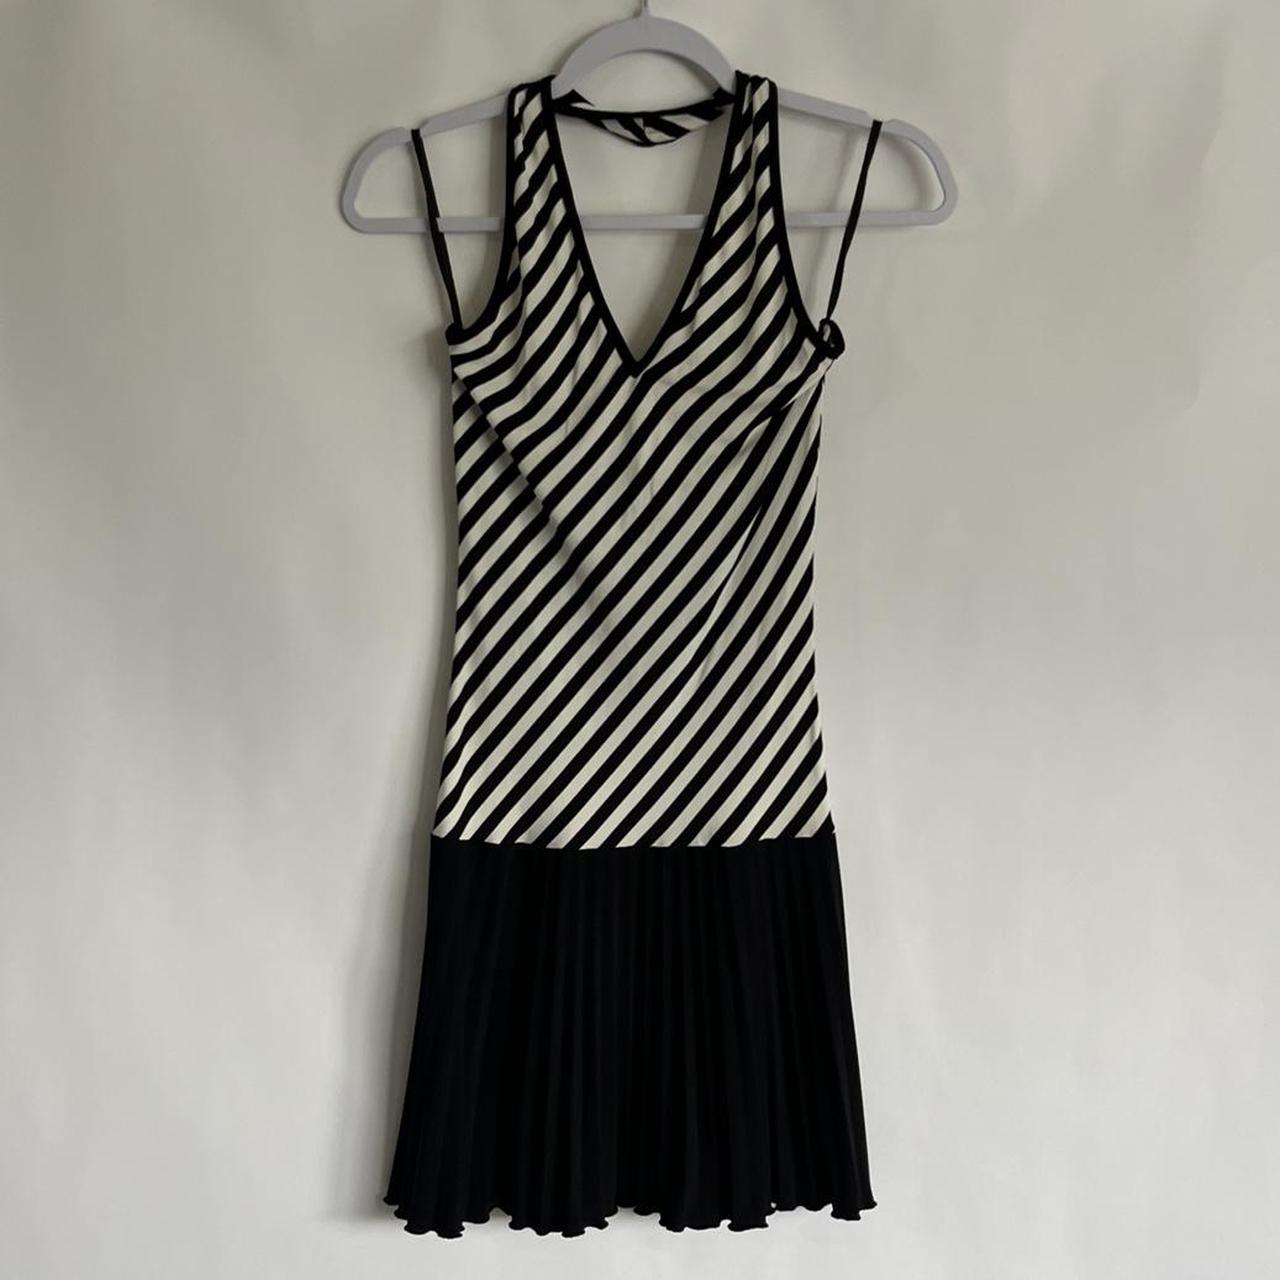 Khaki Krew Women's Black and White Dress